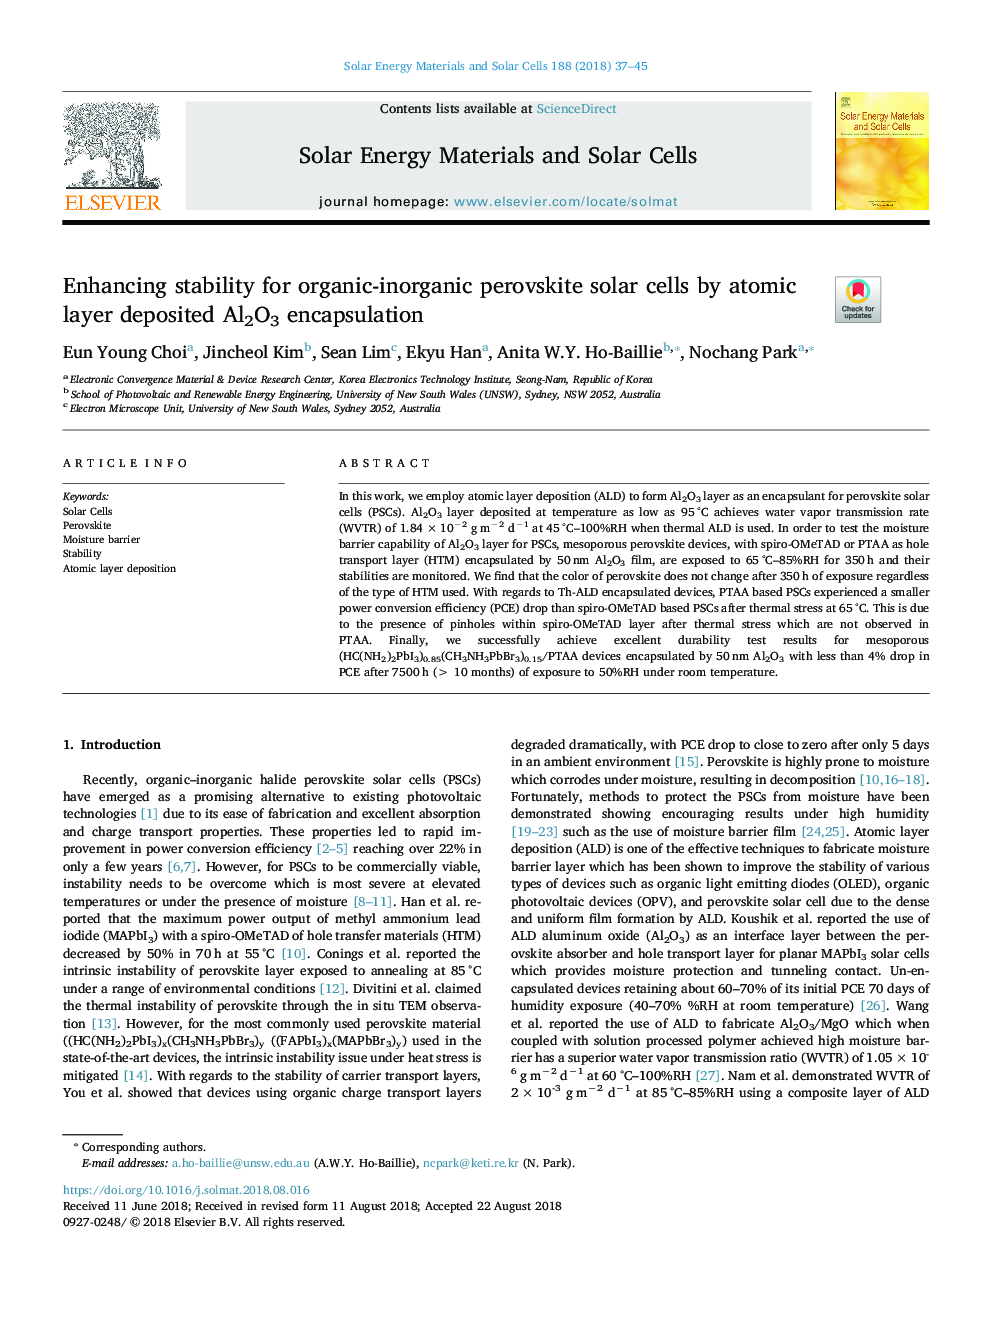 Enhancing stability for organic-inorganic perovskite solar cells by atomic layer deposited Al2O3 encapsulation